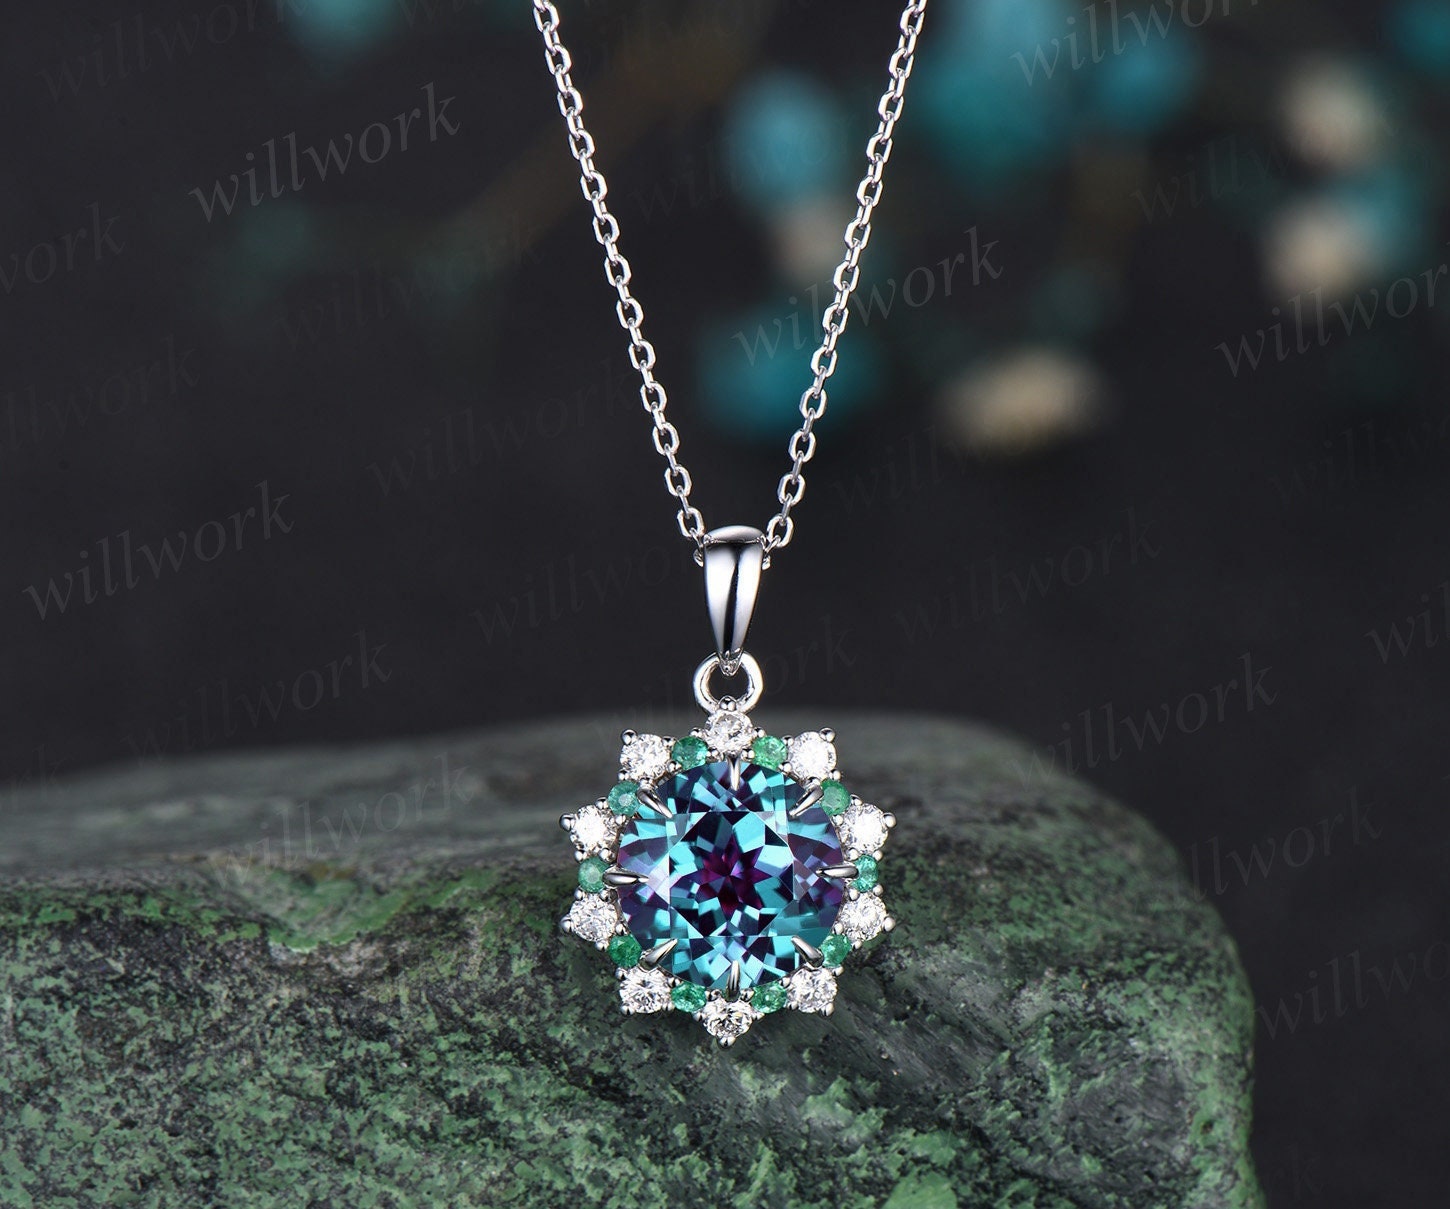 Stuller Clover Necklace 86369:60025:P 14KY - Boyd Jewelers | Boyd Jewelers  | Wesley Chapel, FL